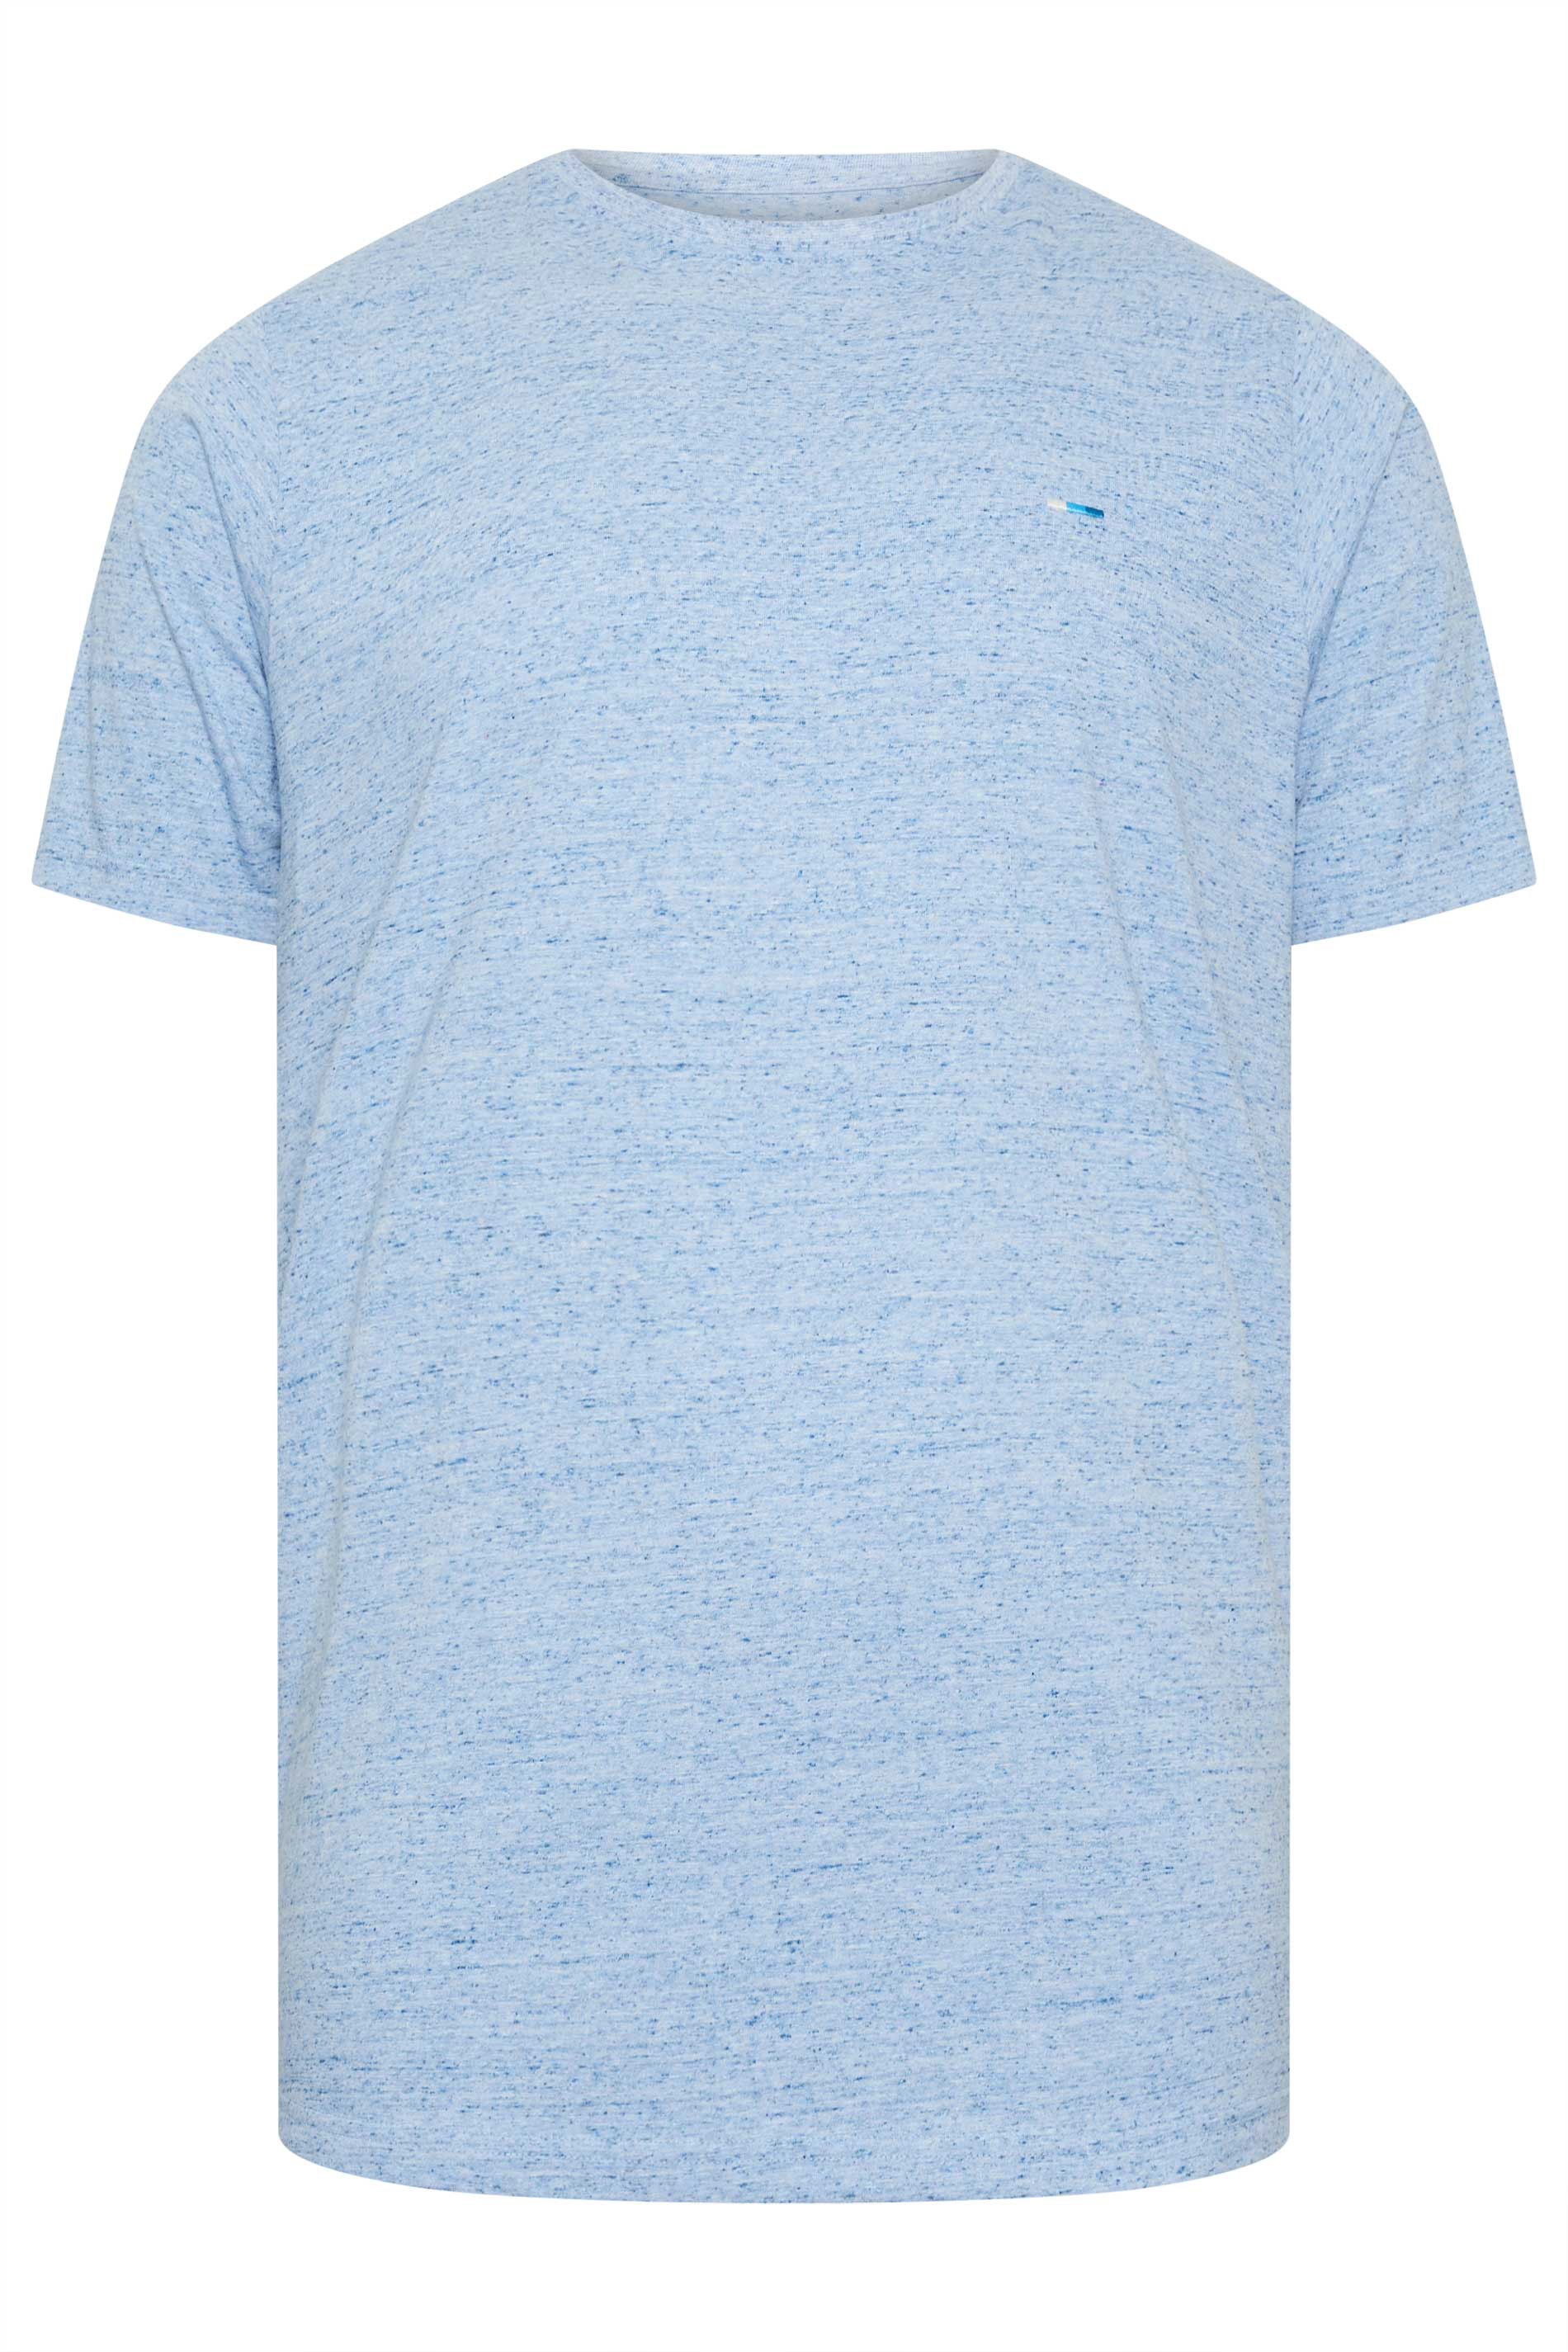 BadRhino Big & Tall Blue Marl T-Shirt | BadRhino 3